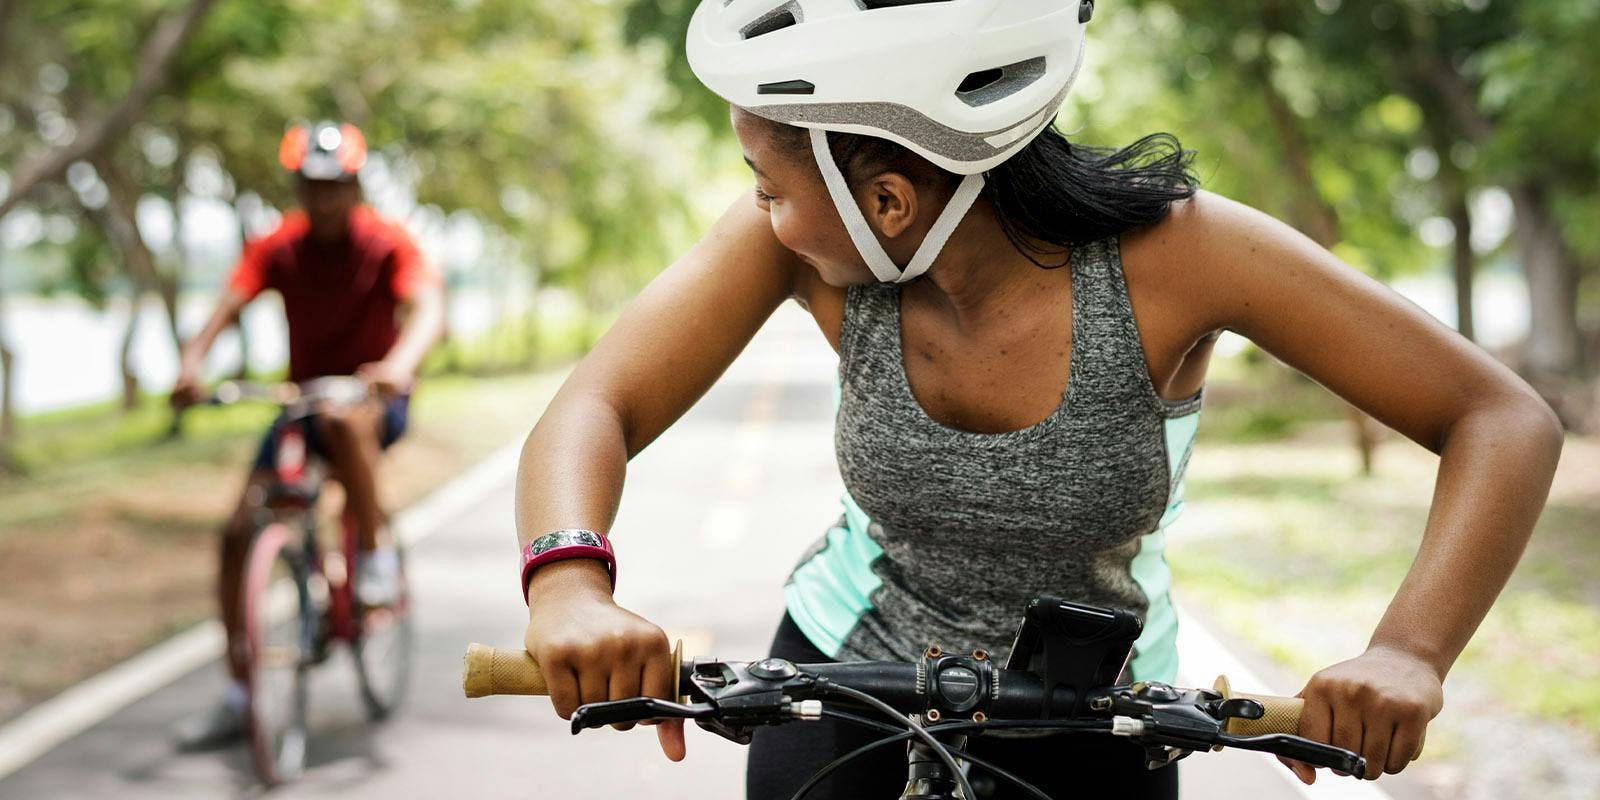 Woman biking, looking back towards her partner